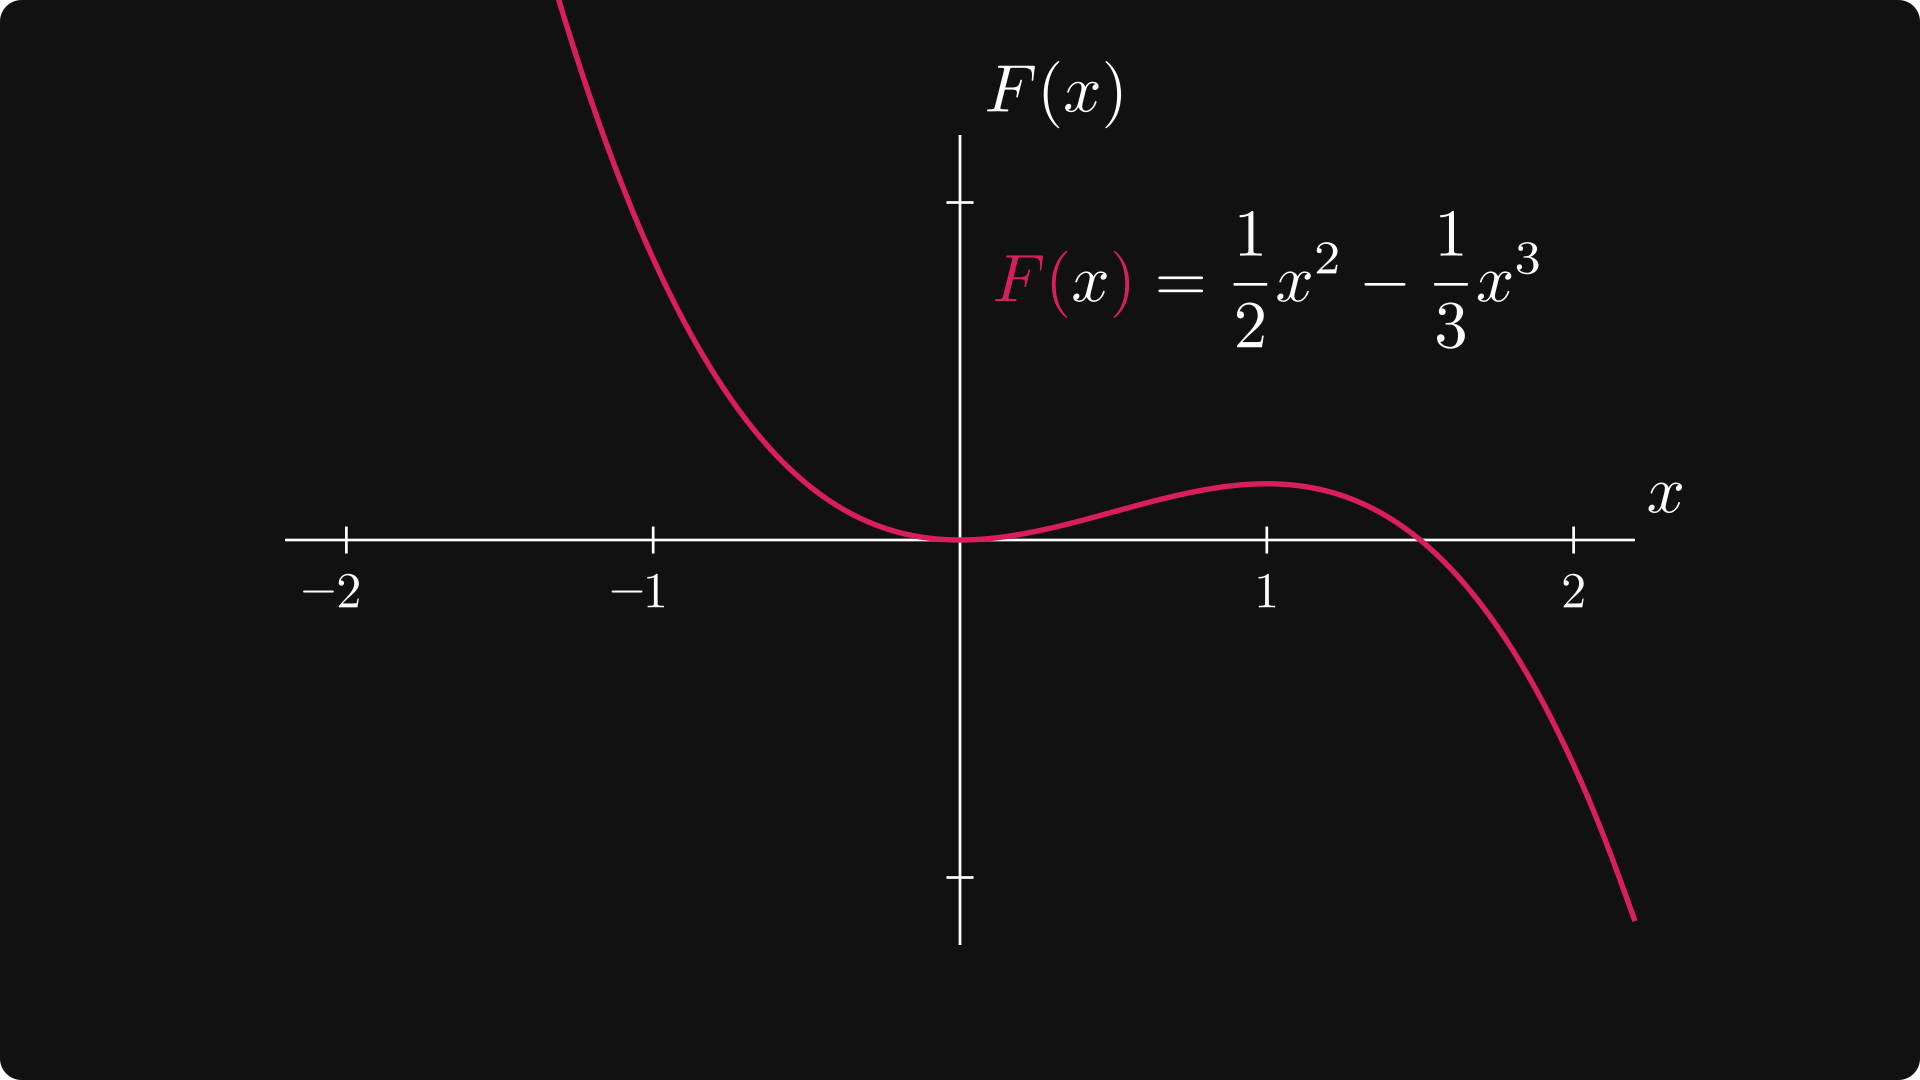 Anti-derivative of x(1 - x)